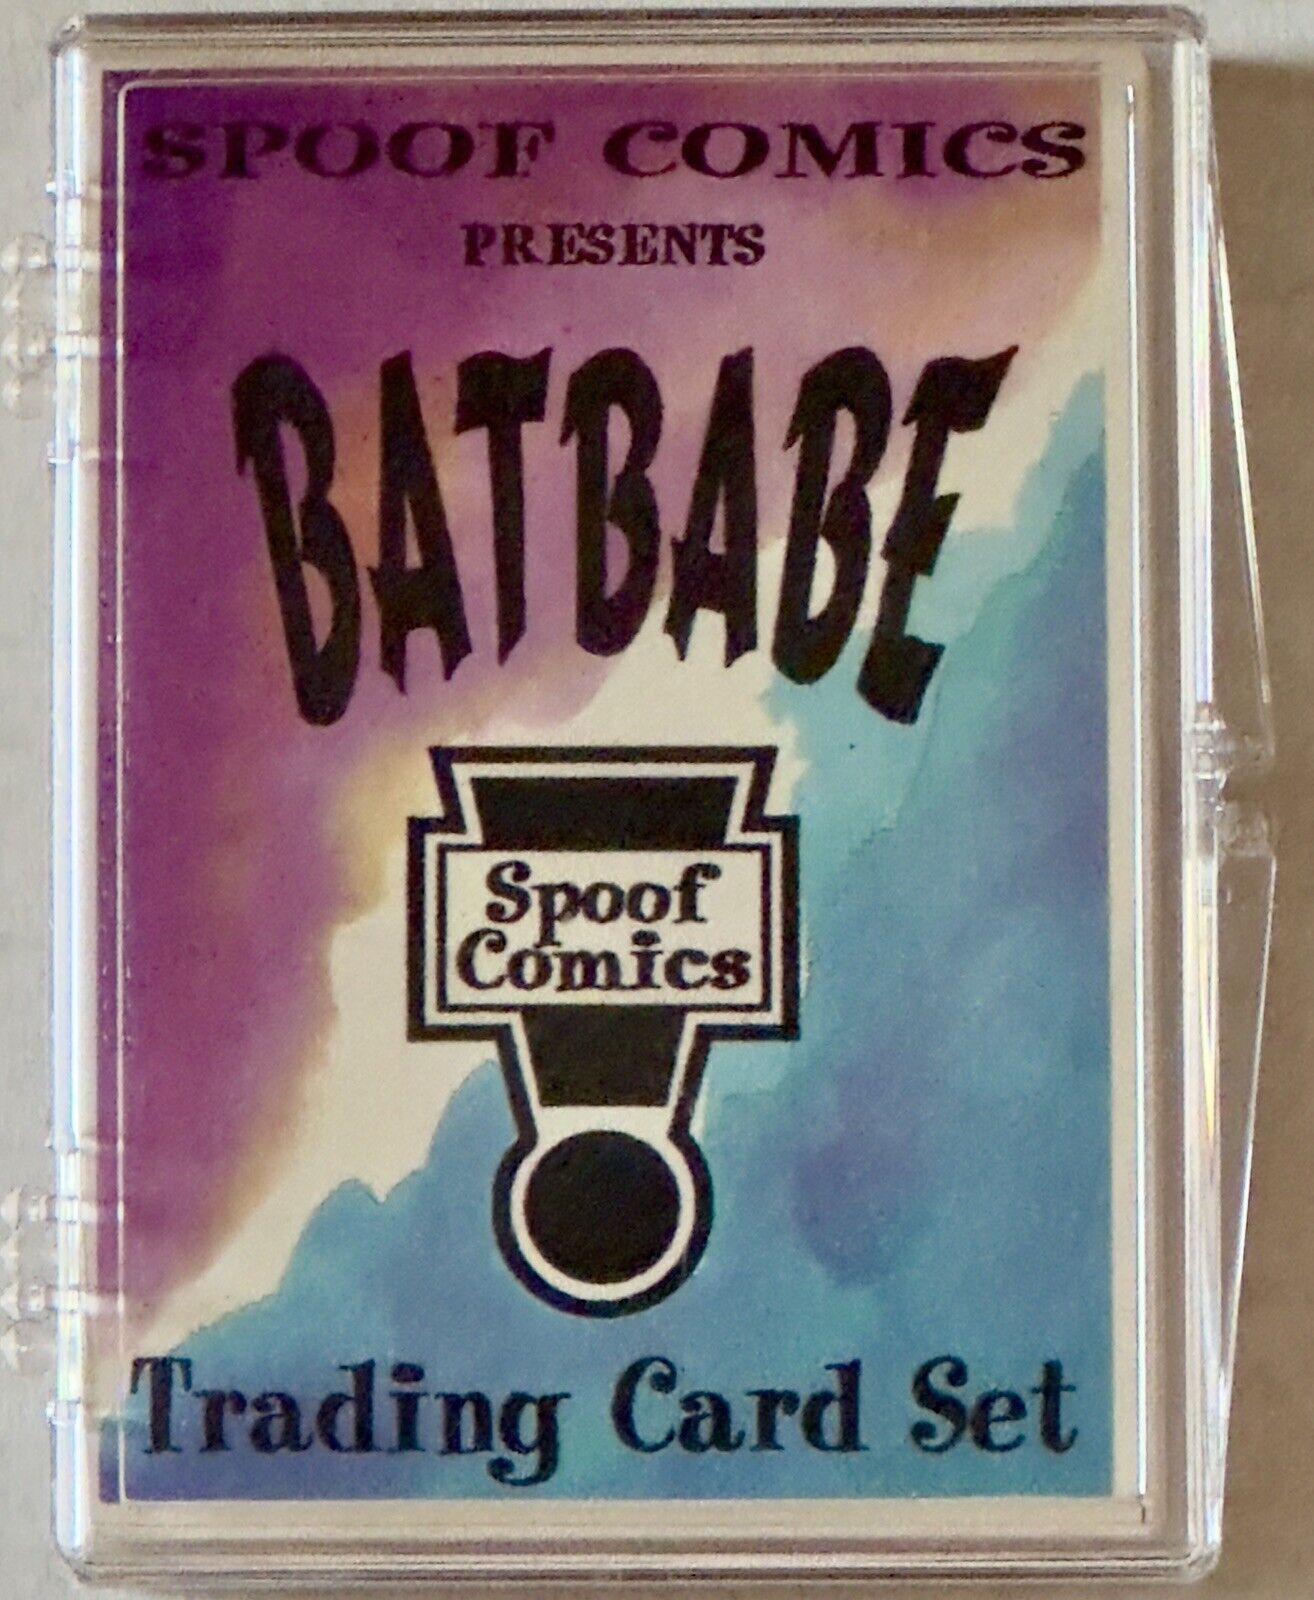 VTG 1992 SPOOF COMICS BATBABE Personality Comics trading card set all 37 in MINT